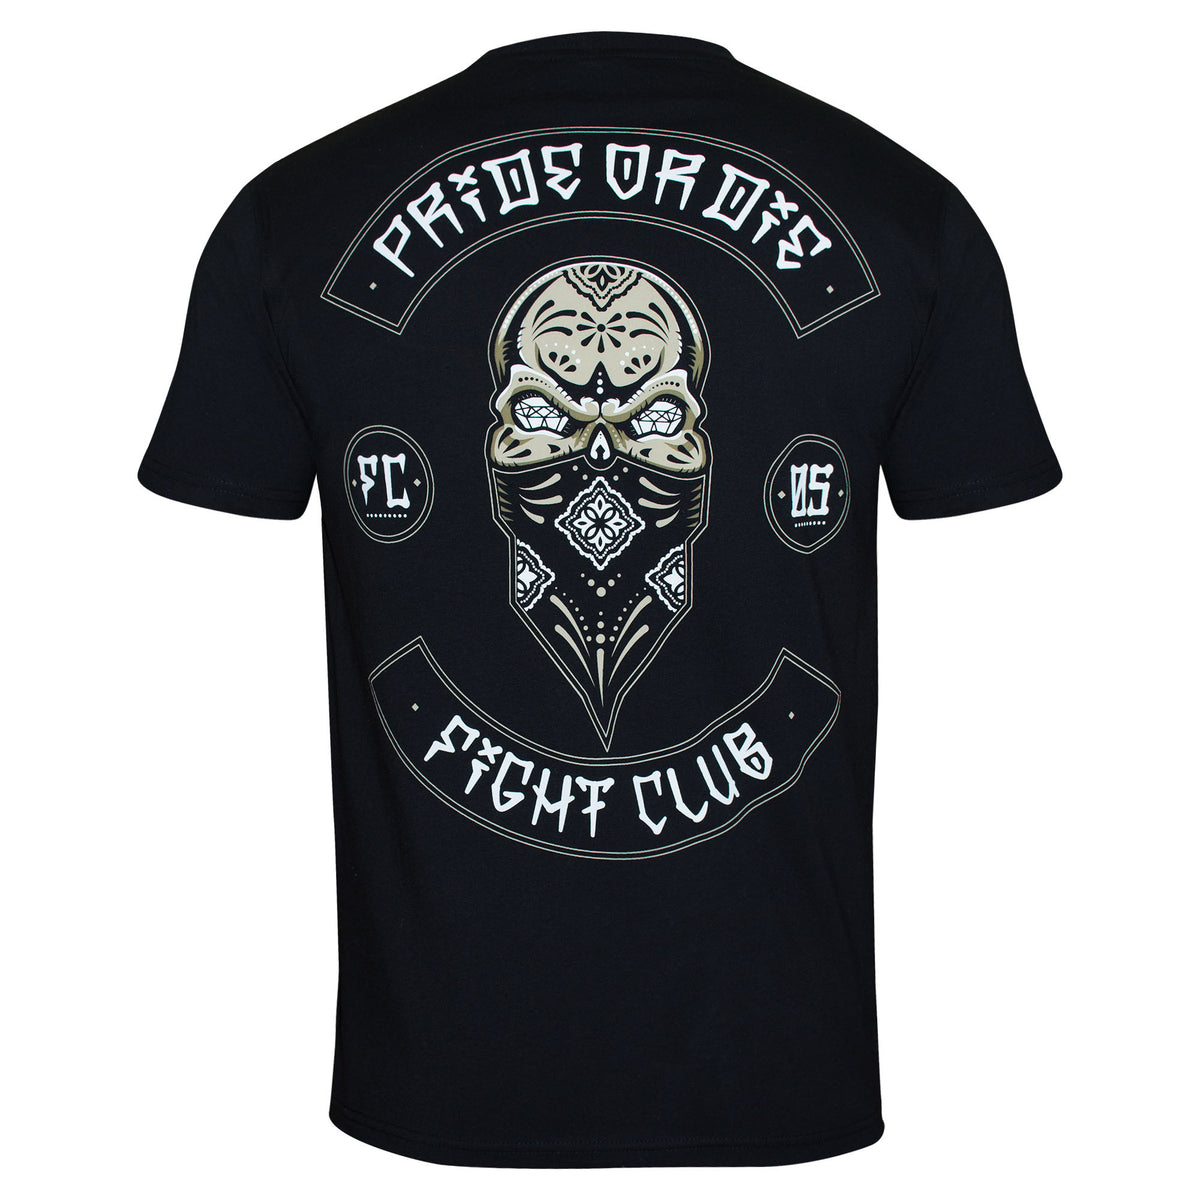 Pride or Die- "FIGHT CLUB MAYANS" T-shirt